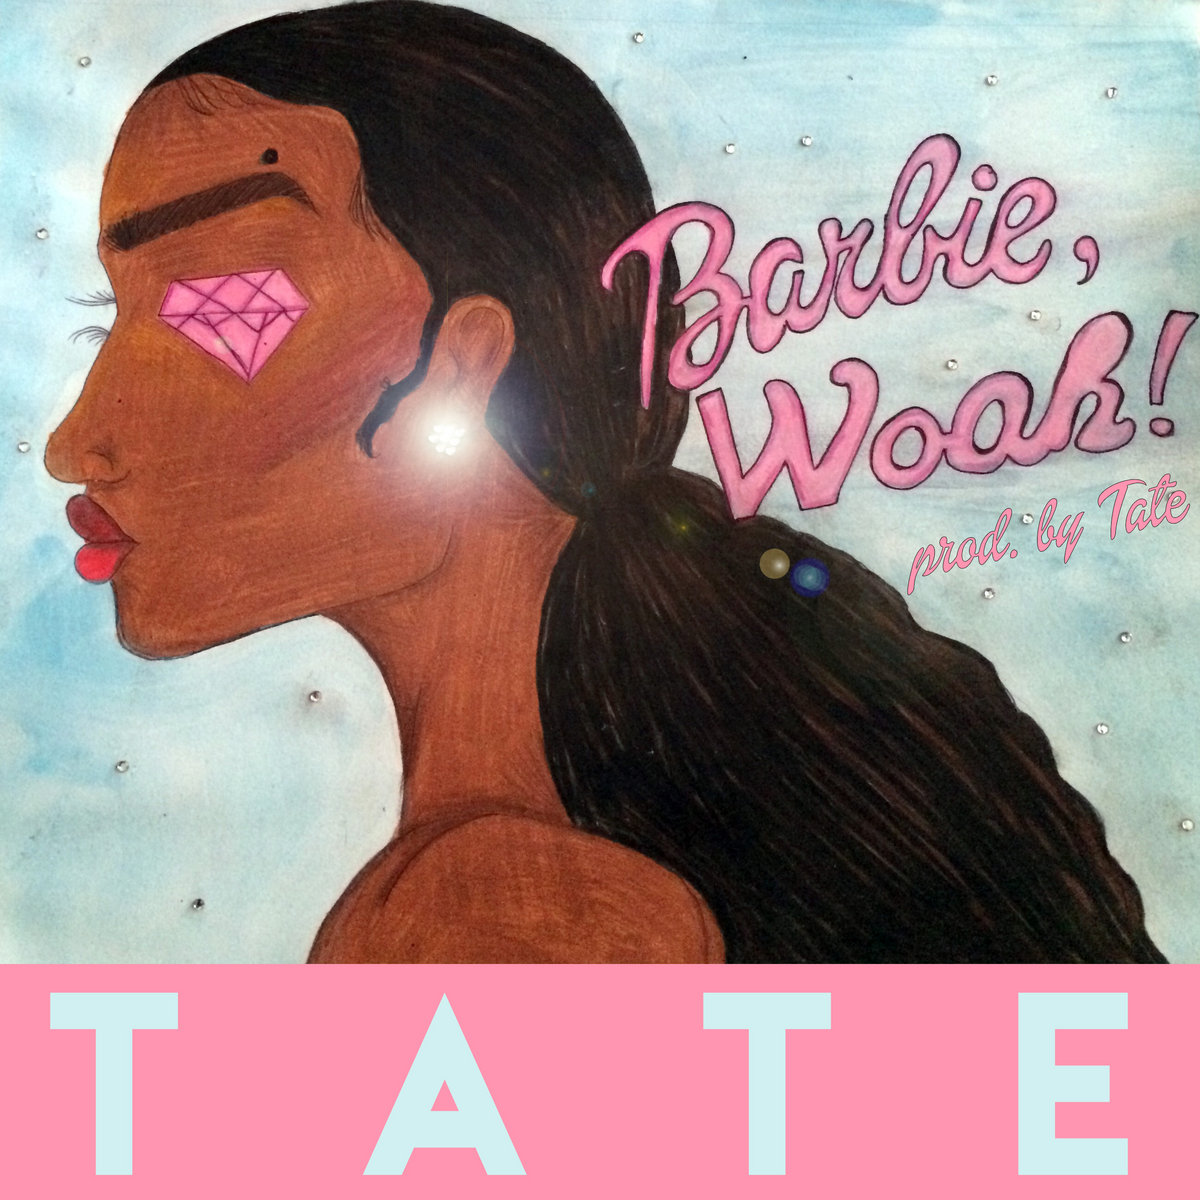 Barbie, Woah! | Yung Baby Tate1200 x 1200